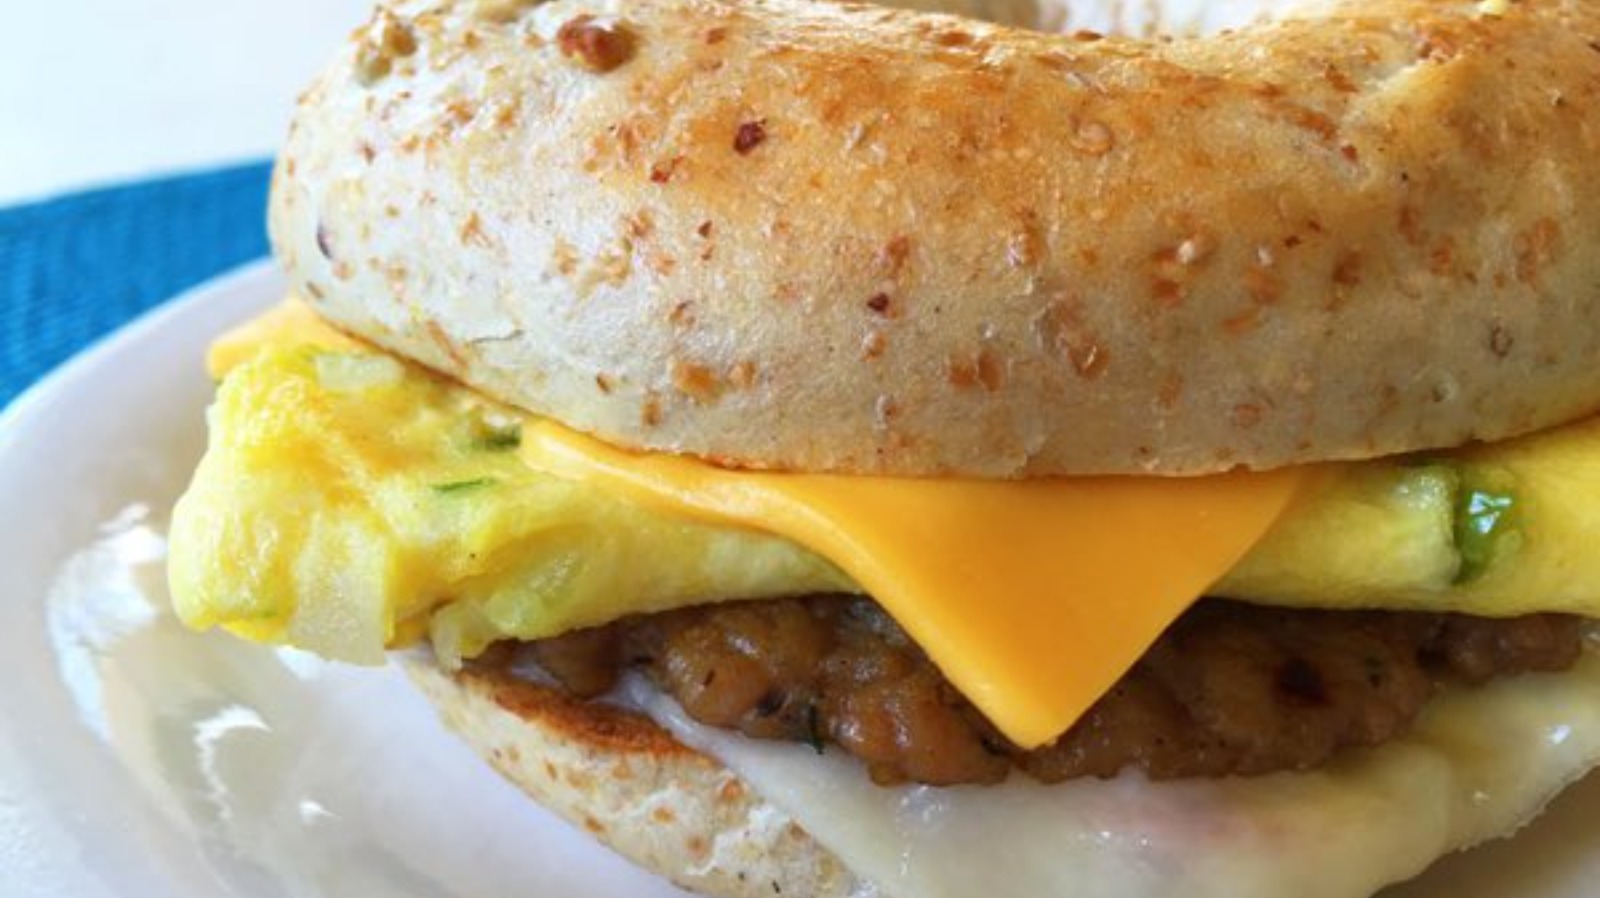 Mcd omelette cheese sandwich